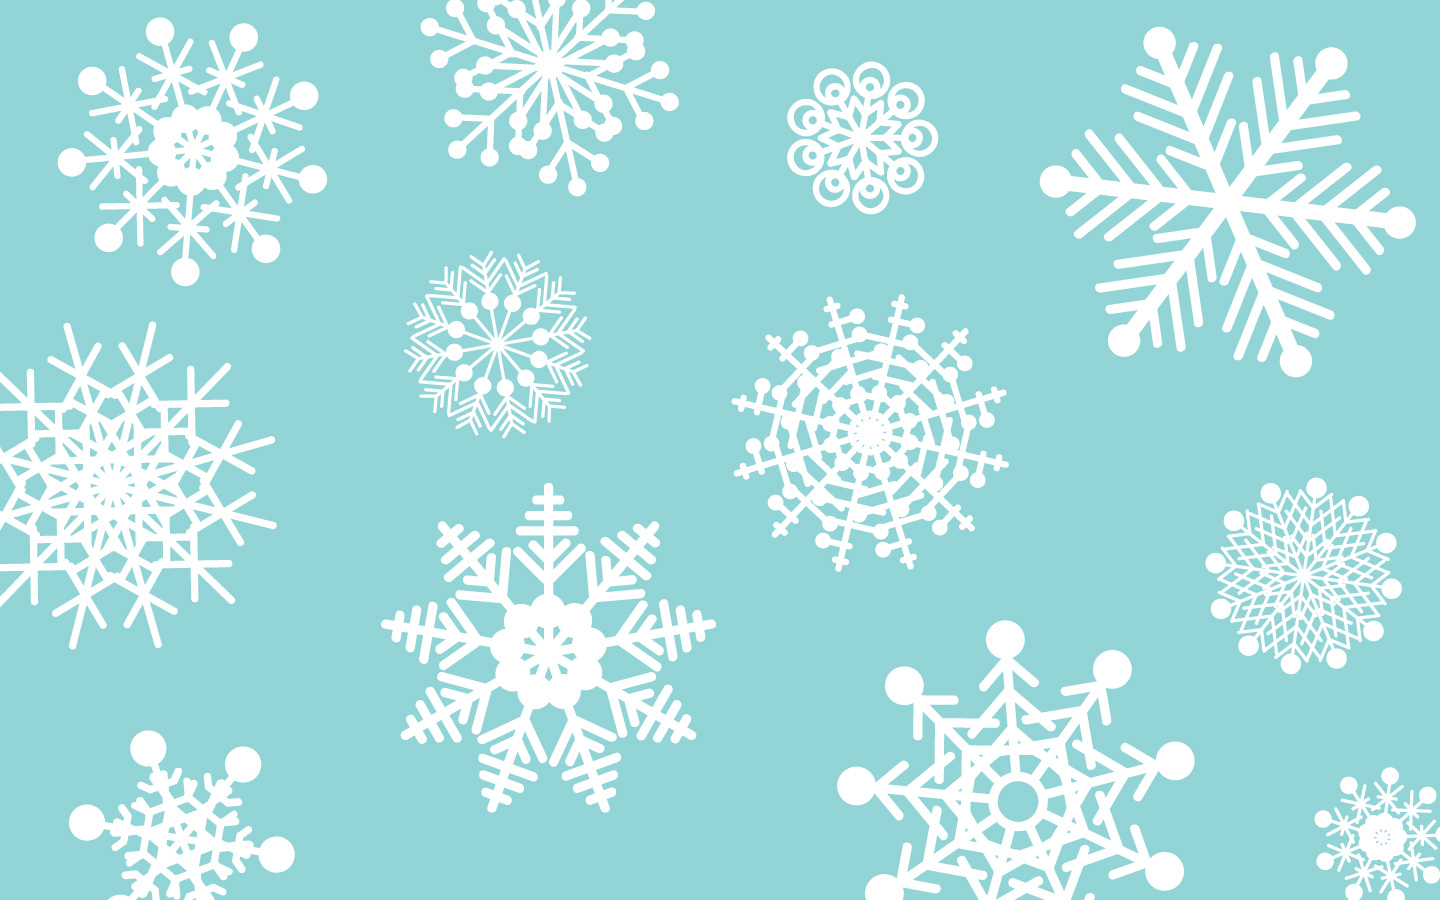 Snowflake desktop backgrounds